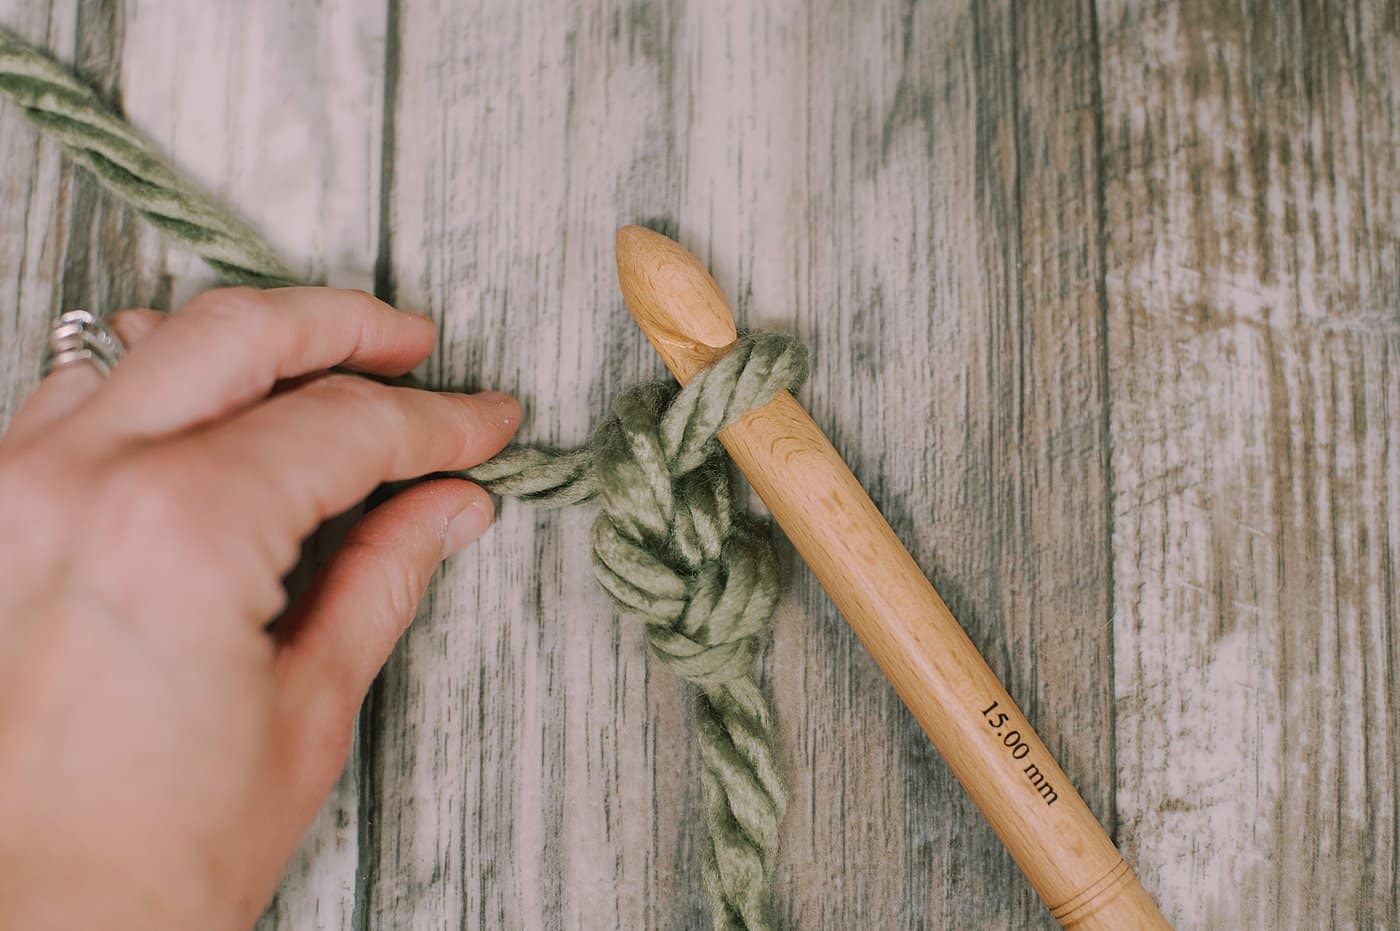 Chain stitch using chunky yarn.